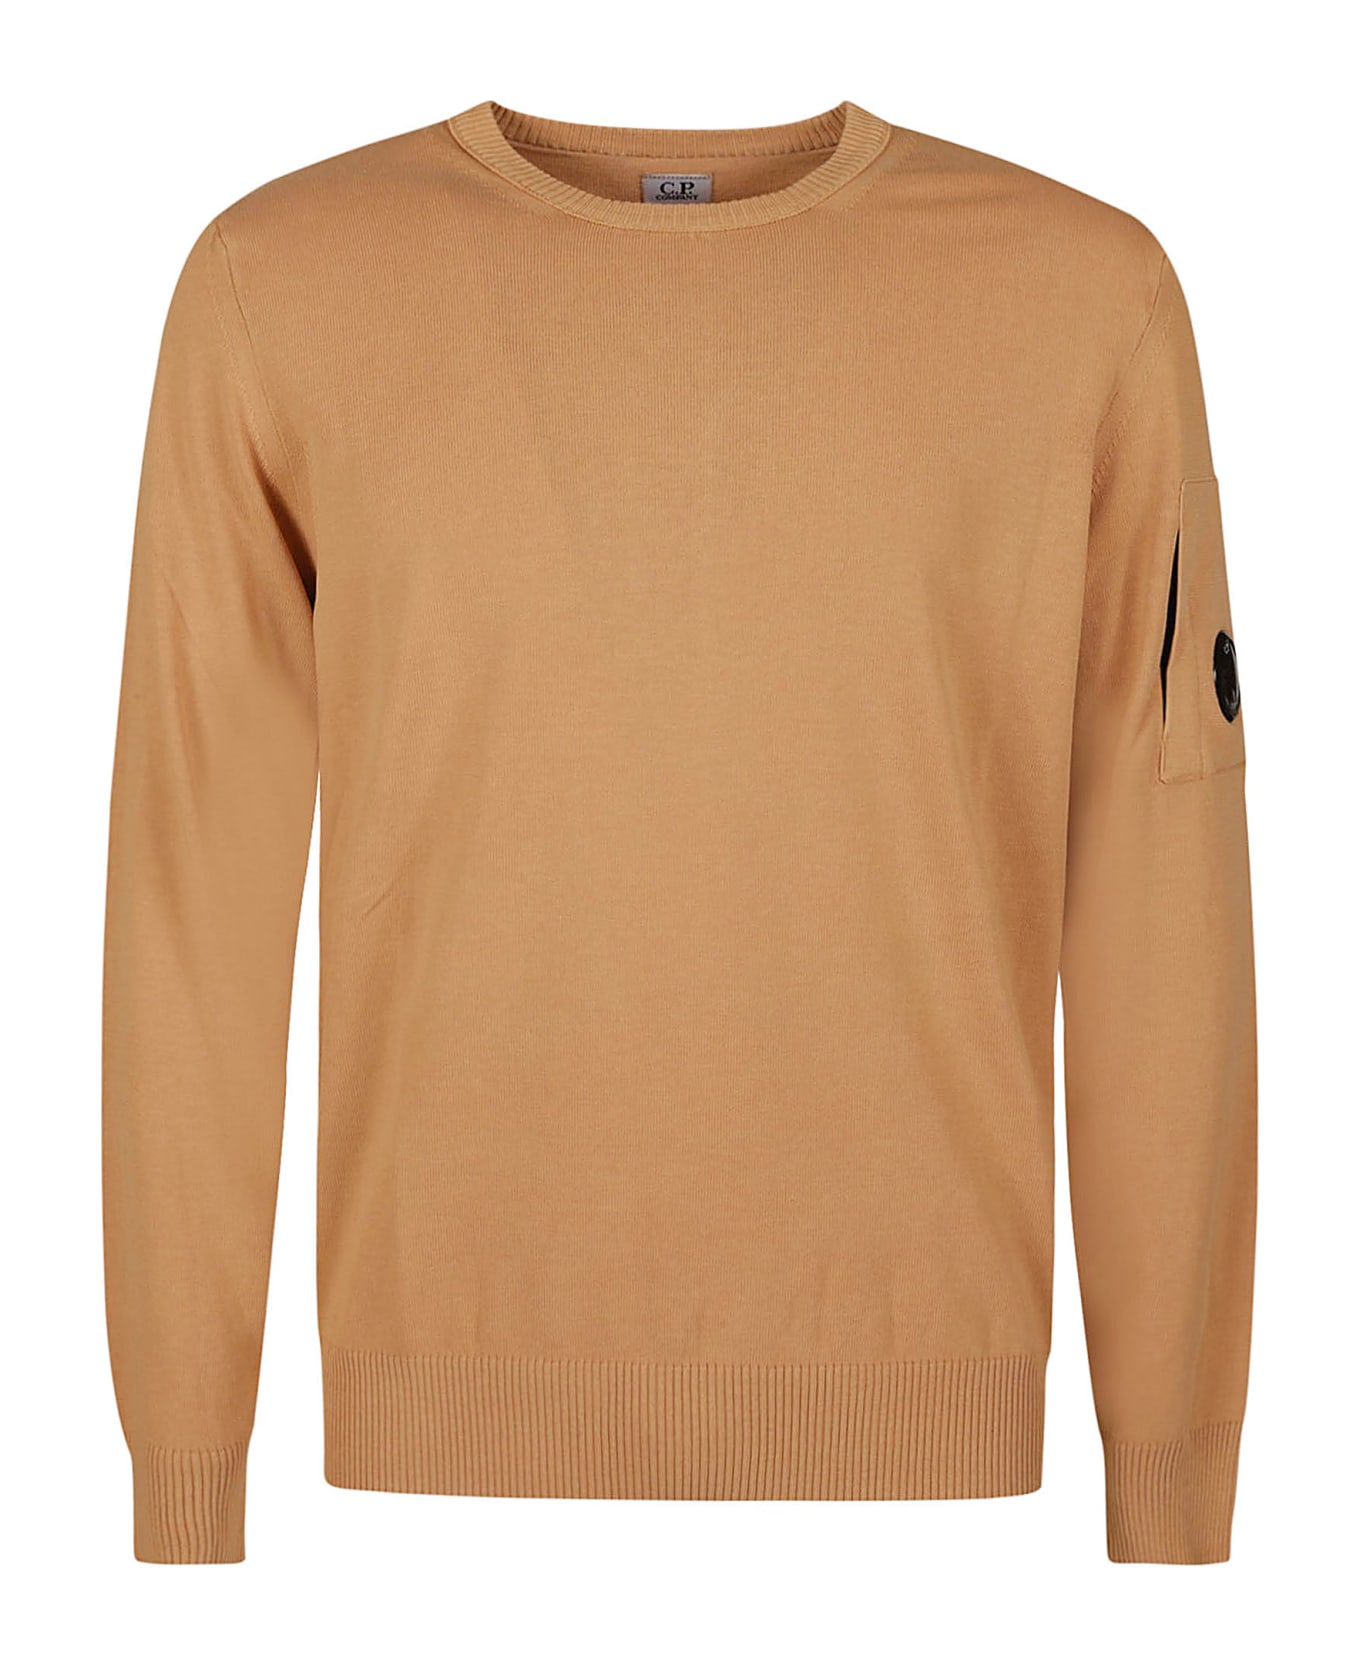 C.P. Company Old Dyed Crepe Sweatshirt - PASTRY SHELL ニットウェア